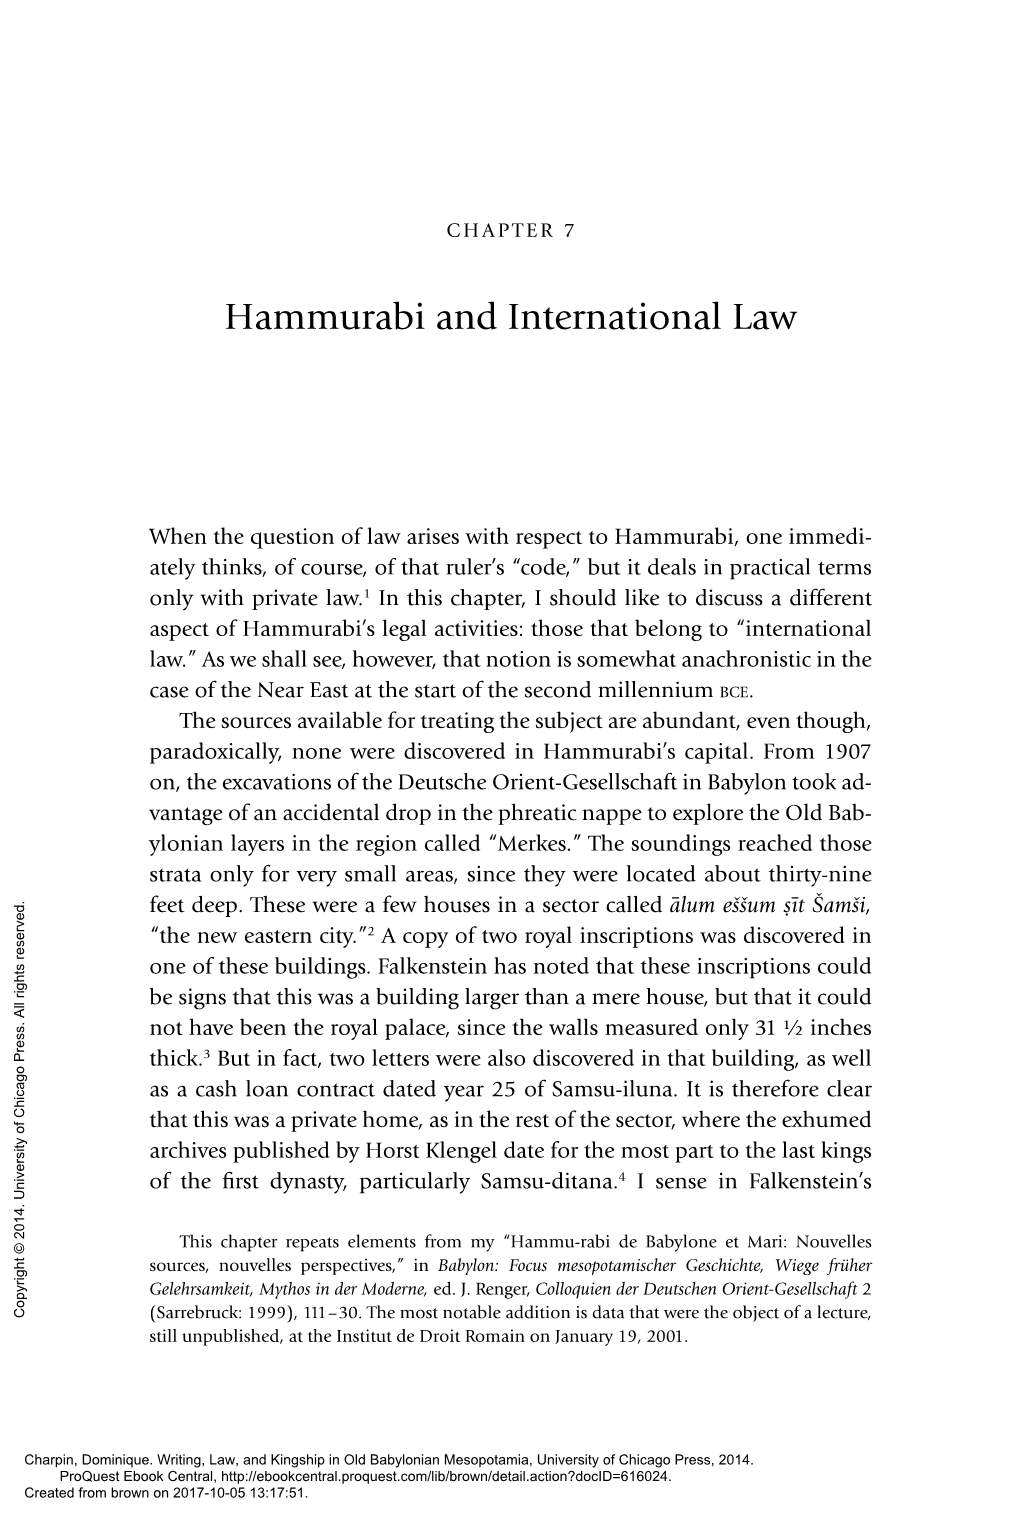 Hammurabi and International Law